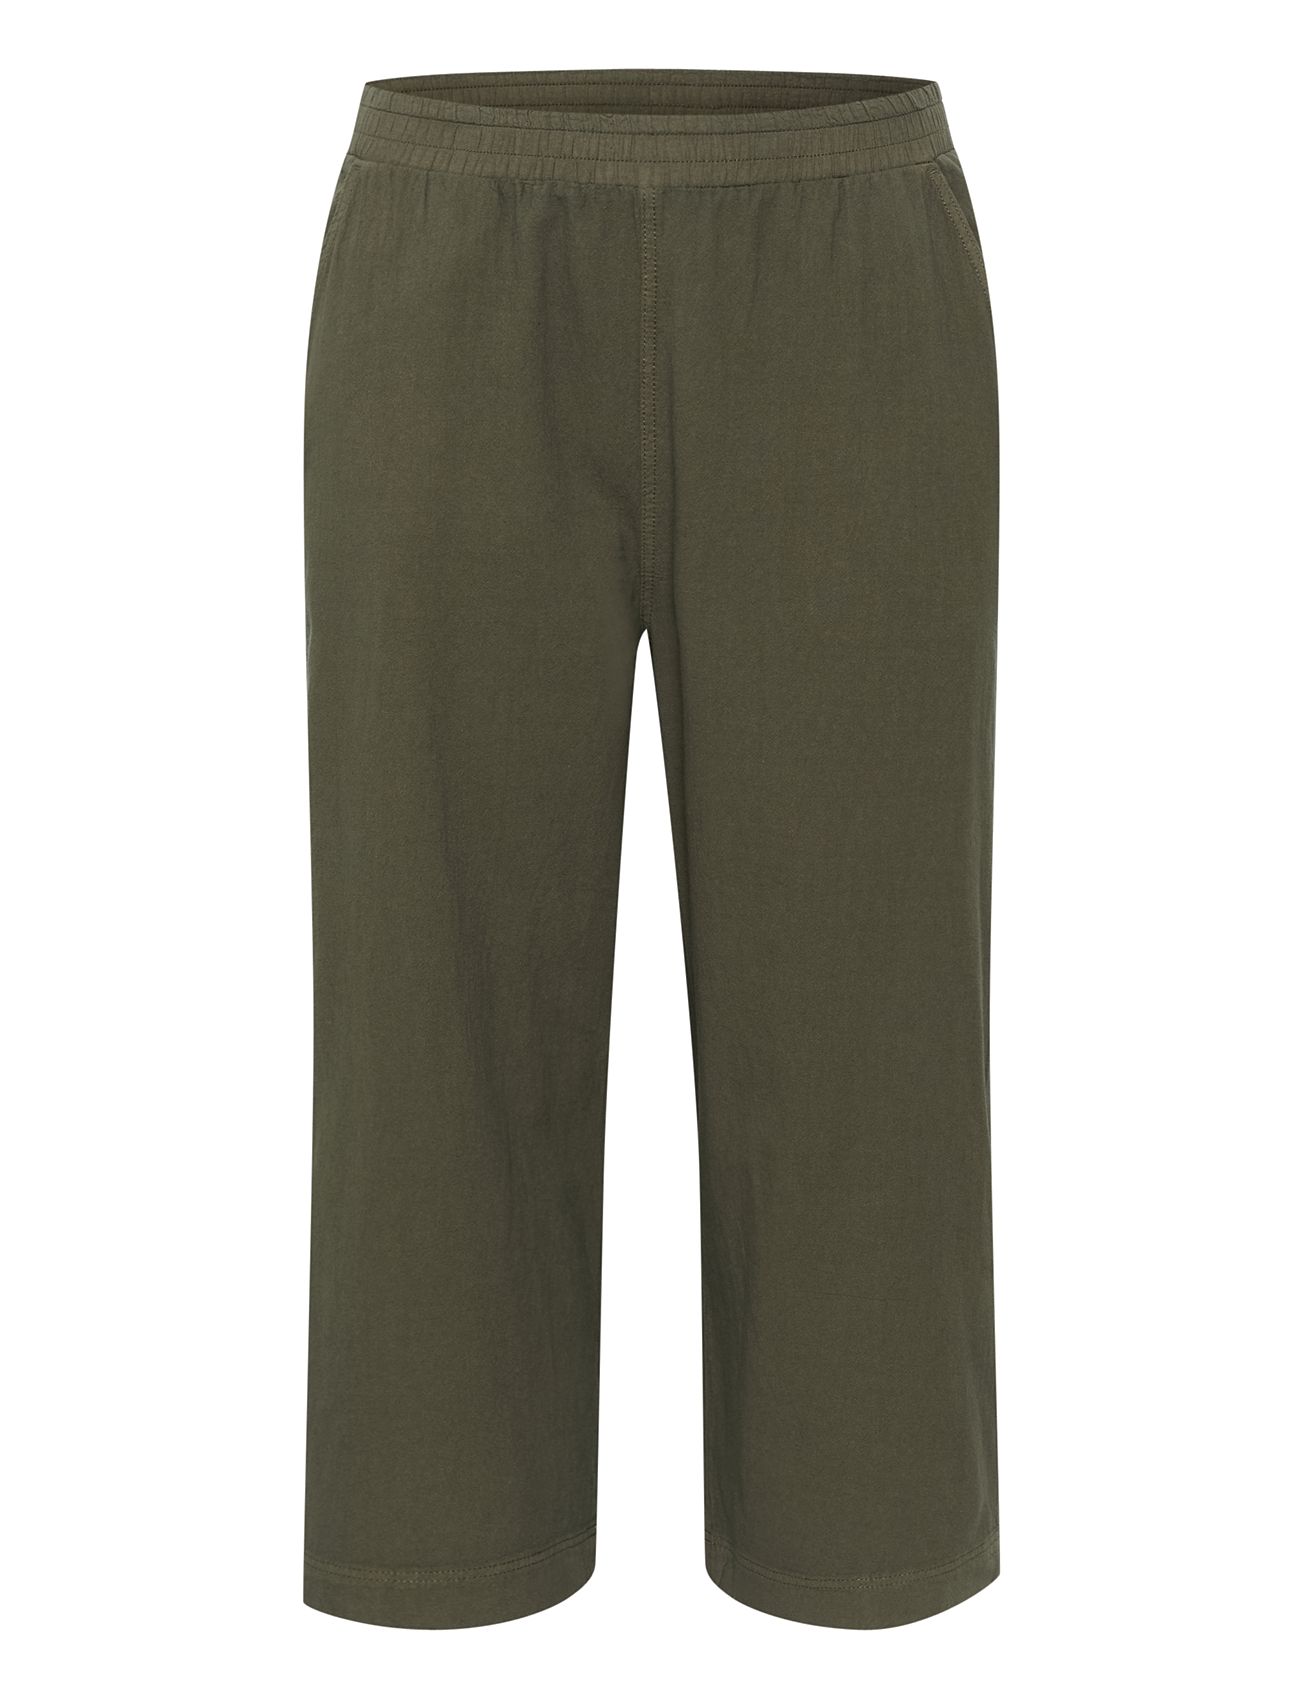 Kcnana Culotte Pants Bottoms Trousers Culottes Khaki Green Kaffe Curve